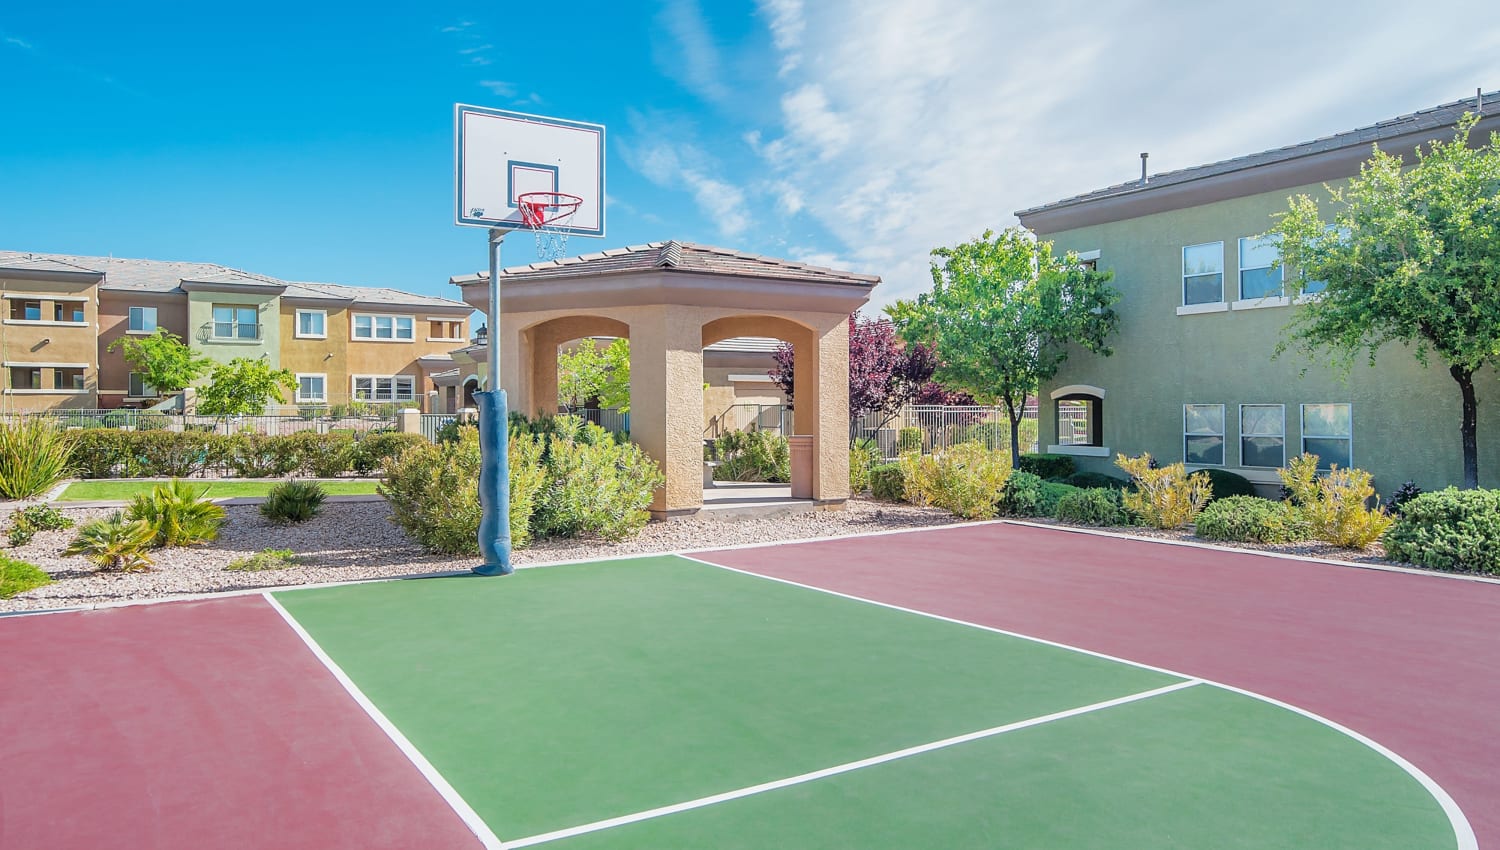 Basketball court and gazebo at Morningstar Apartments in Las Vegas, Nevada